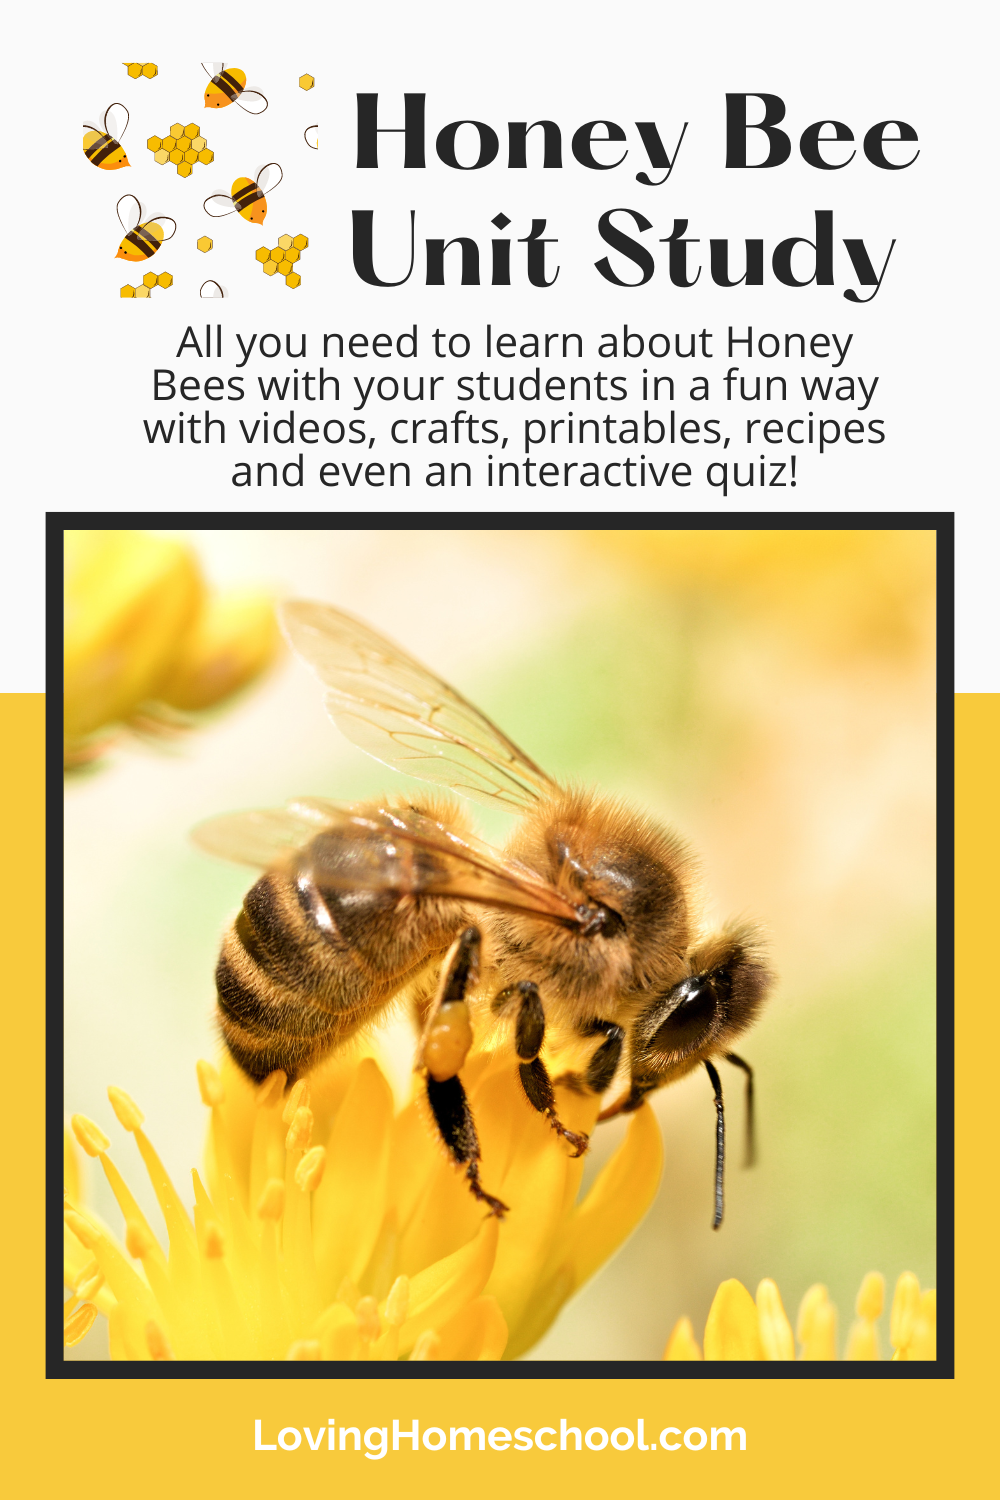 Honey Bee Unit Study Pinterest Pin